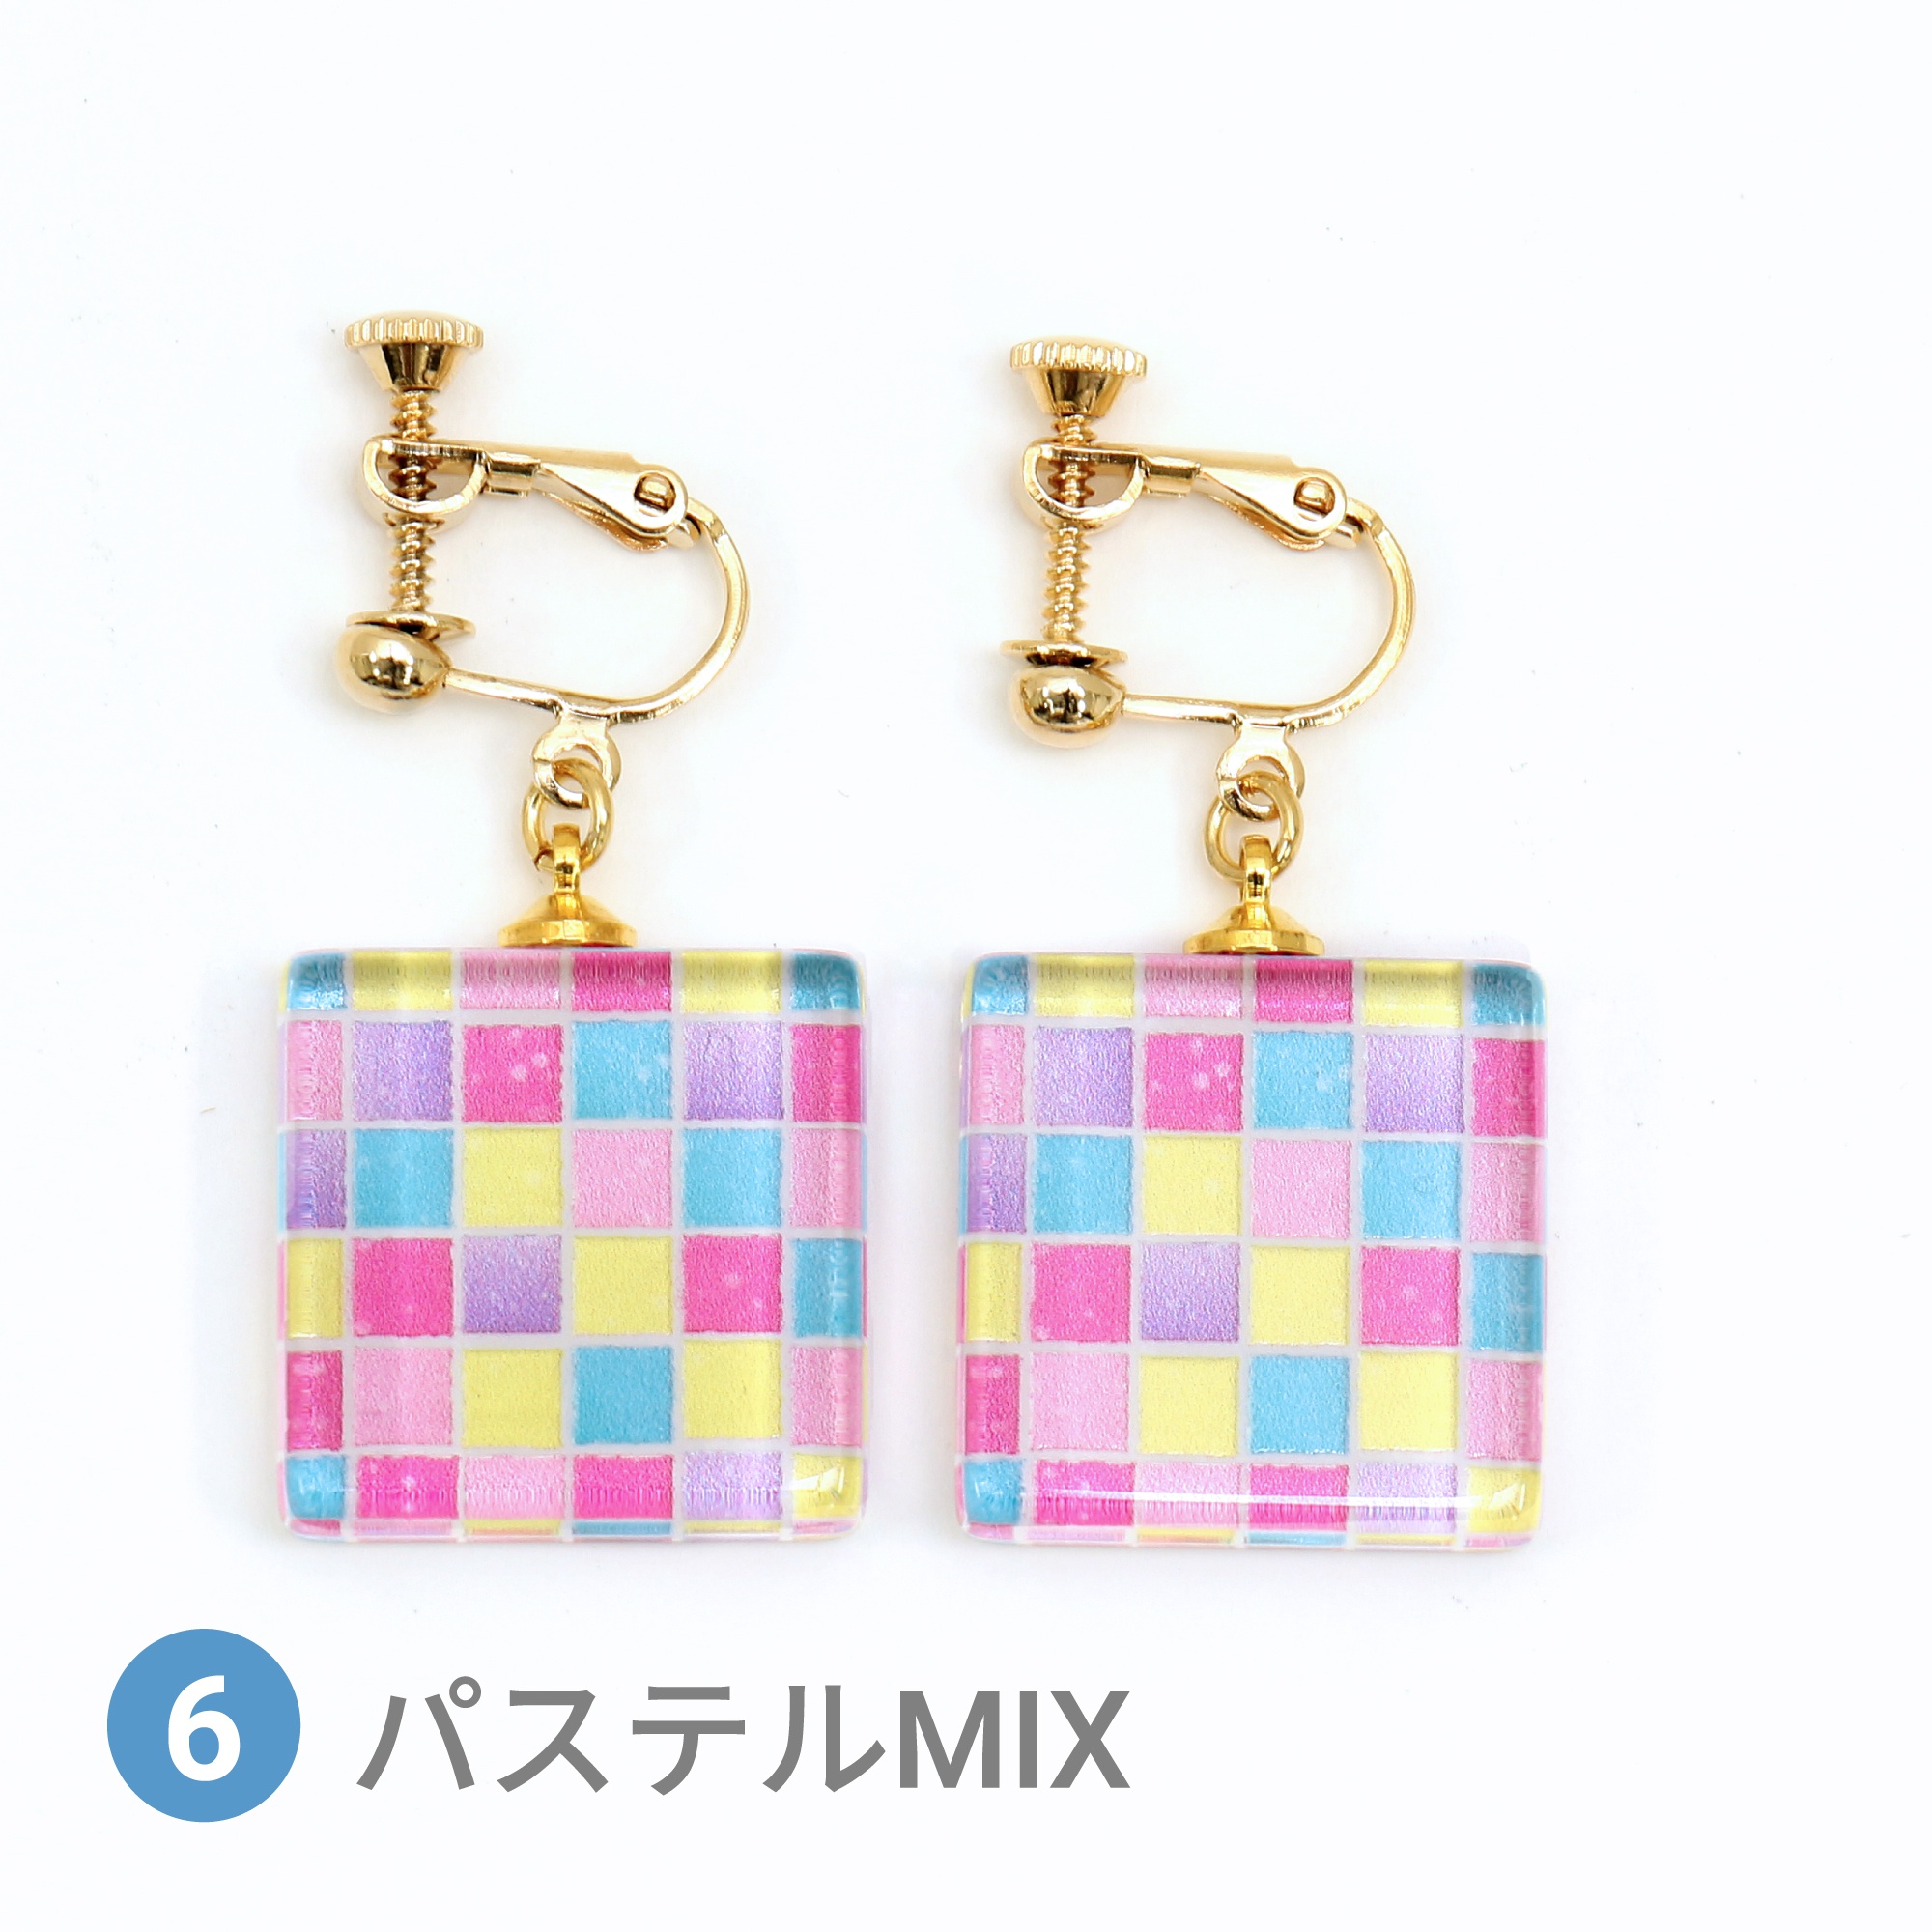 Glass accessories Earring TILE pastel mix square shape